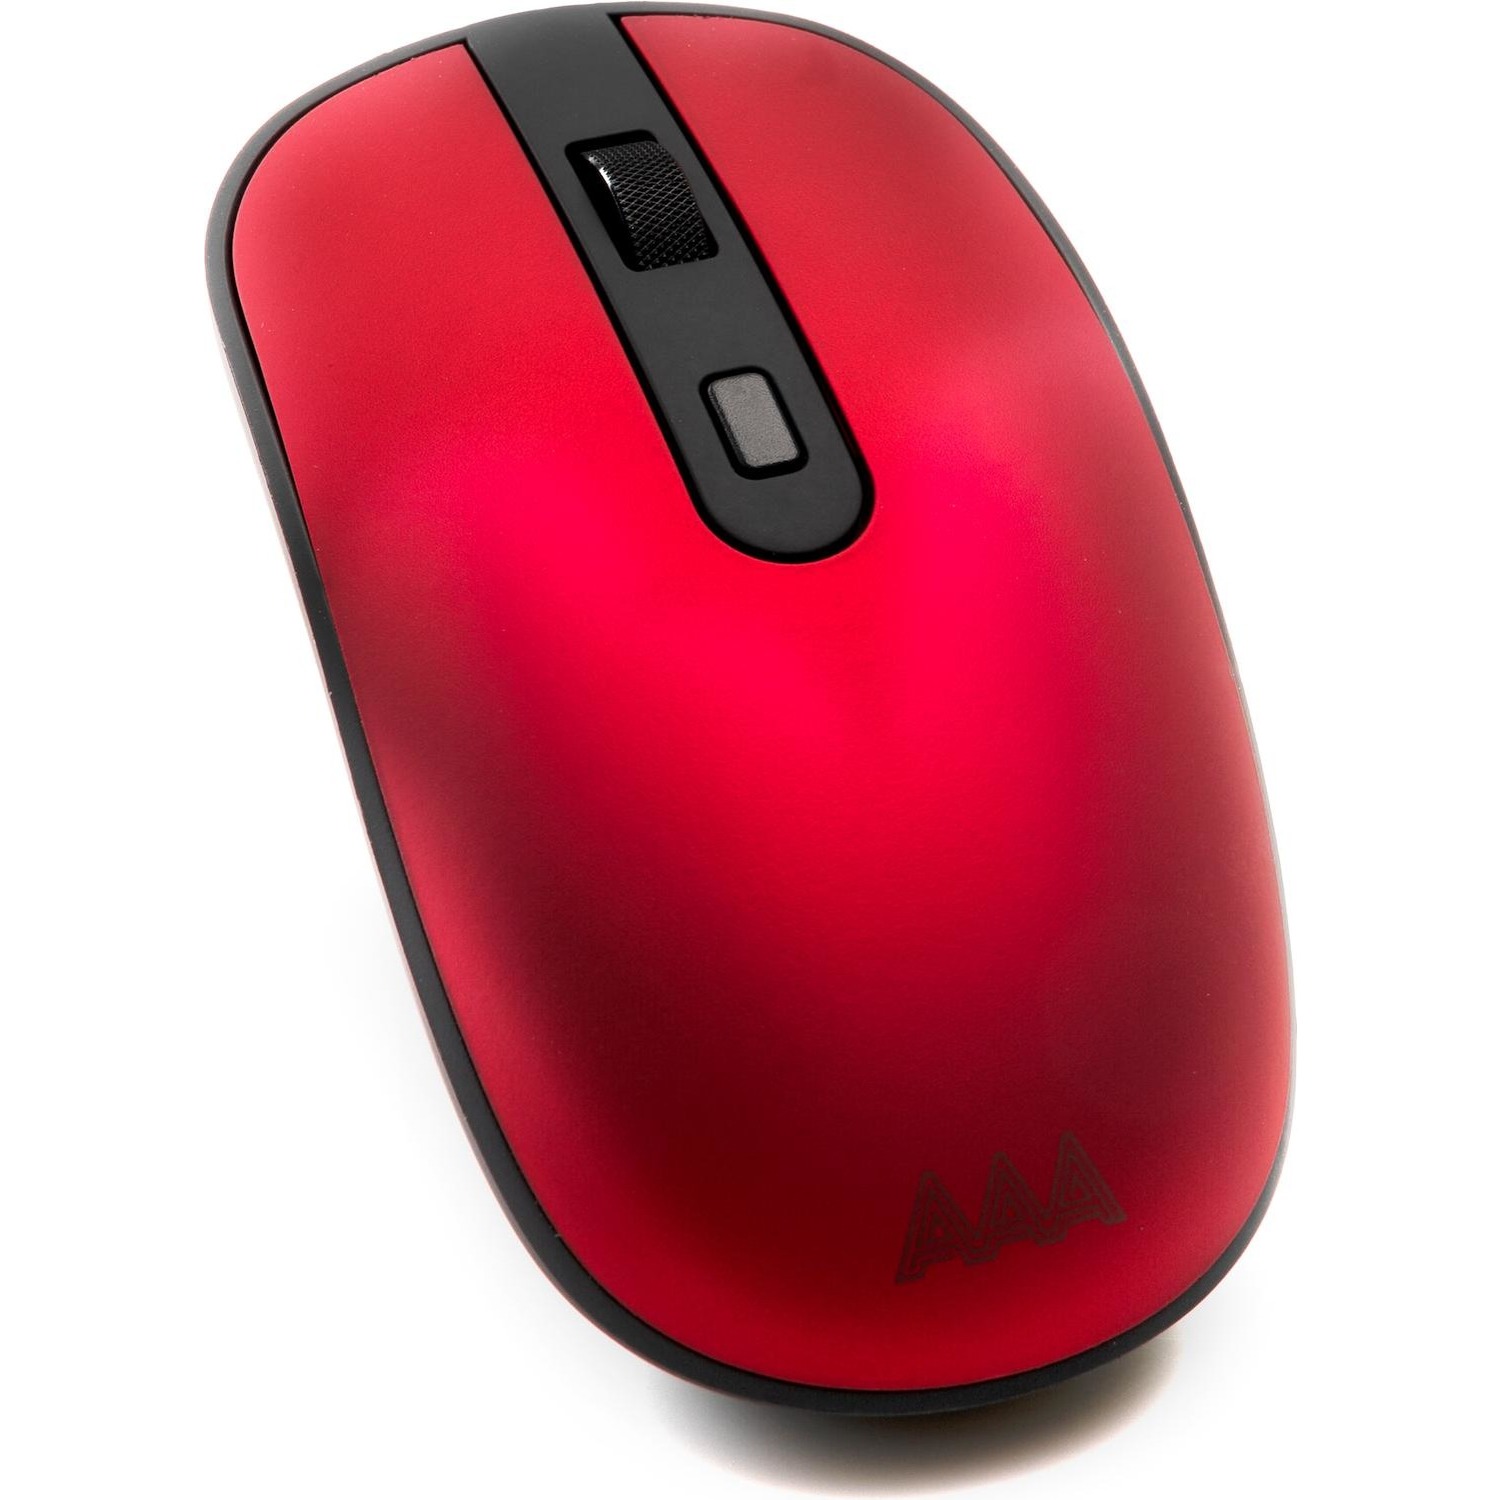 Immagine per Mouse AAAmaze wireless DONGLE Type-C USB 2 in 1 rosso AMIT0025R da DIMOStore